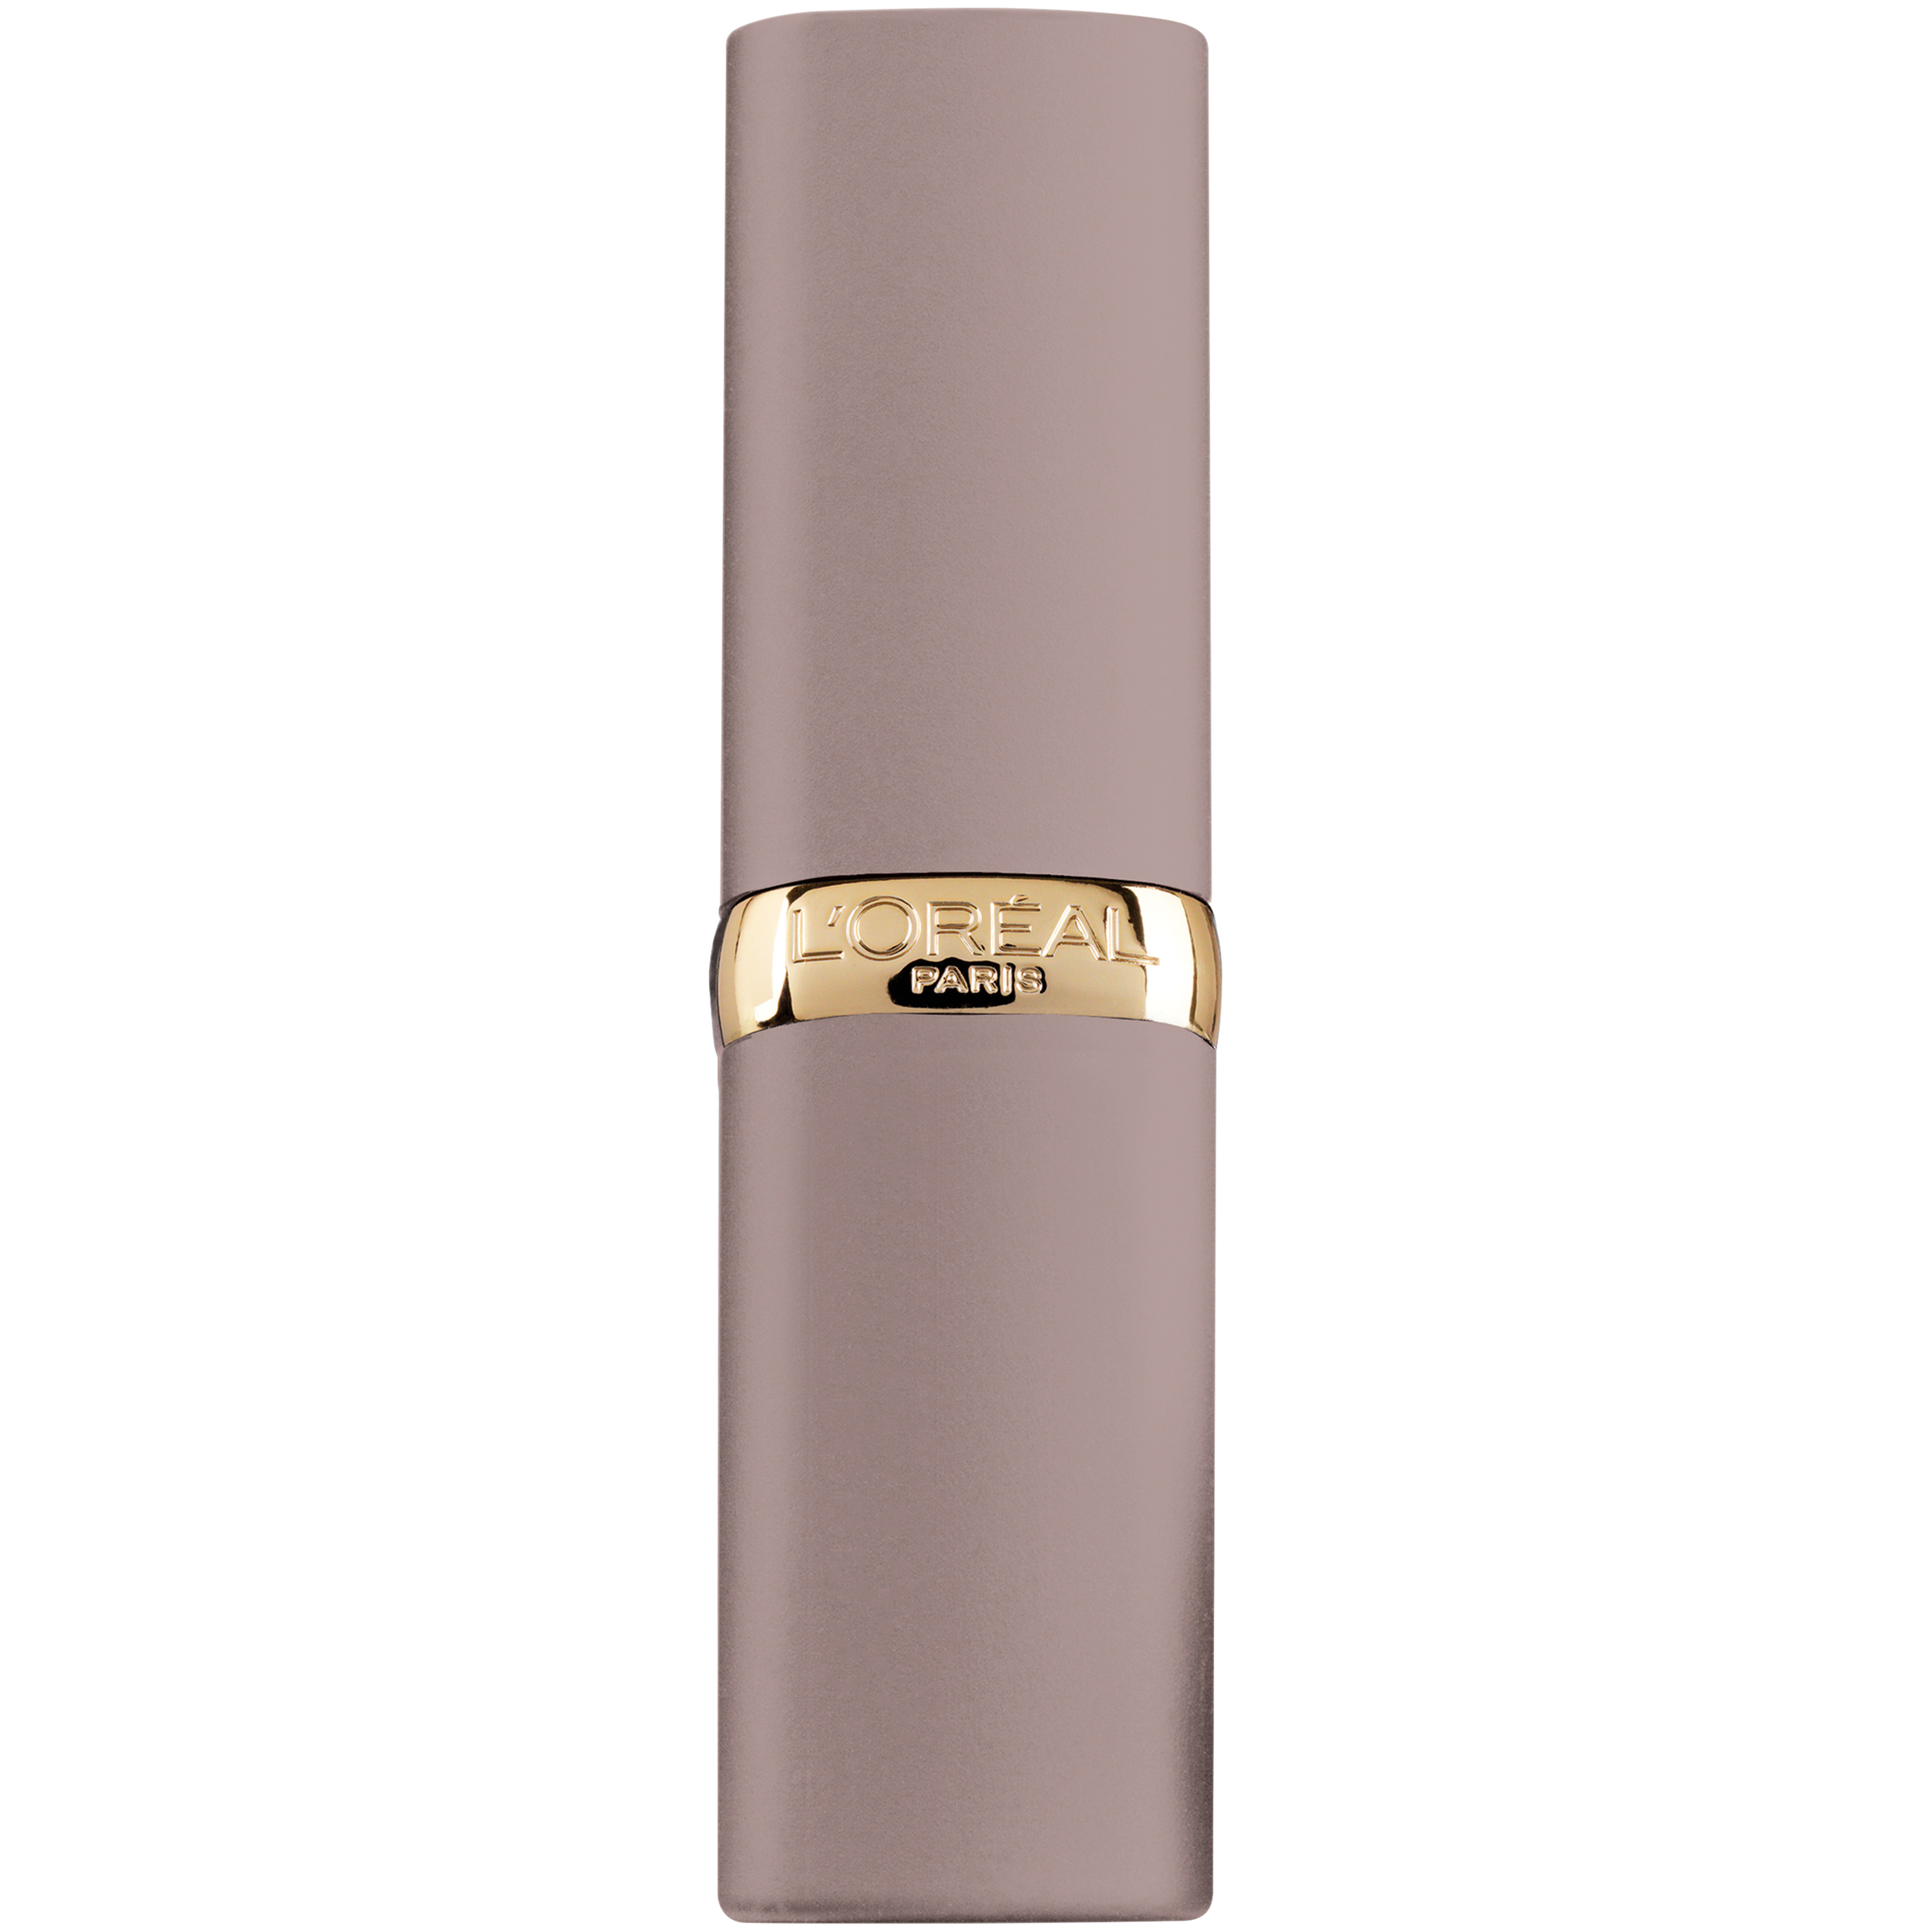 L'Oreal Paris Colour Riche Ultra Matte Highly Pigmented Nude Lipstick, Bold Mauve, 0.13 oz. - image 4 of 5